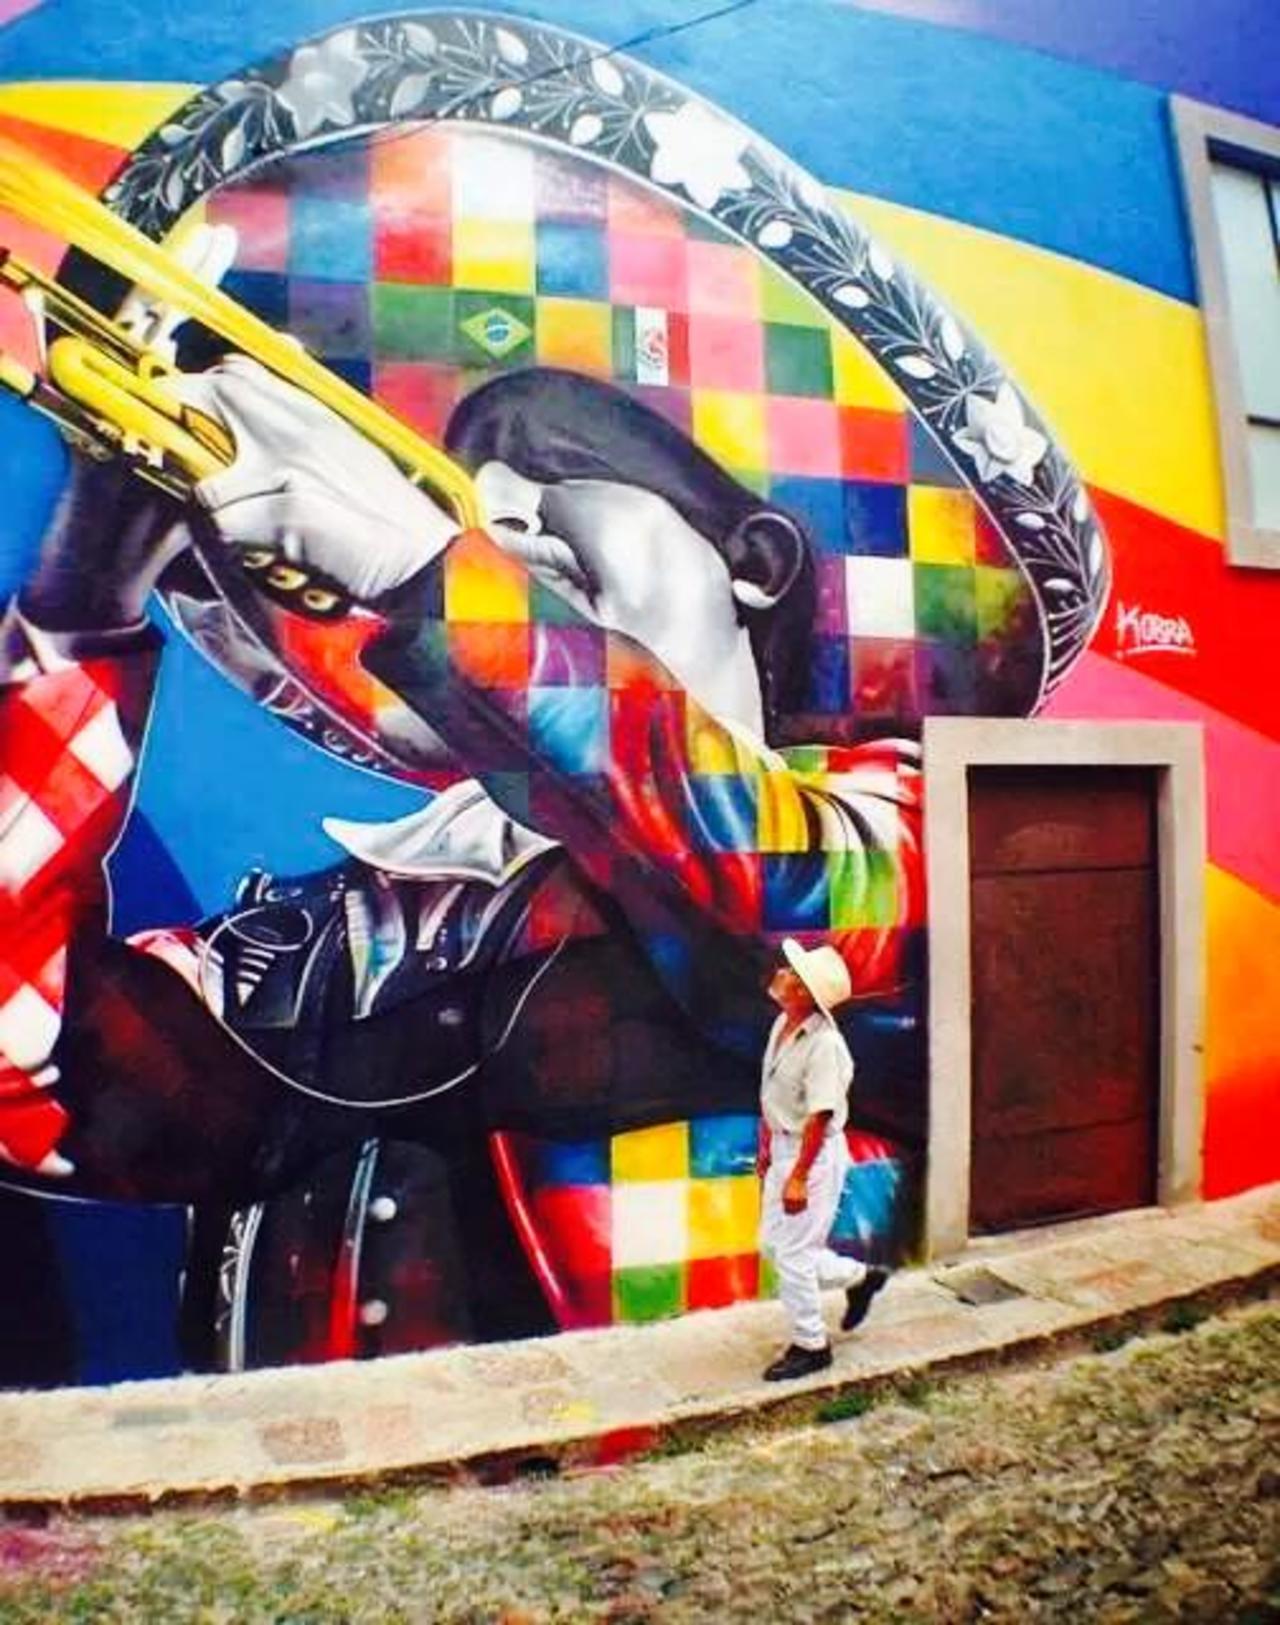 Kobra #streetart #stencil #graffiti #mural #murales #urbanart http://t.co/QUe52wKMrF